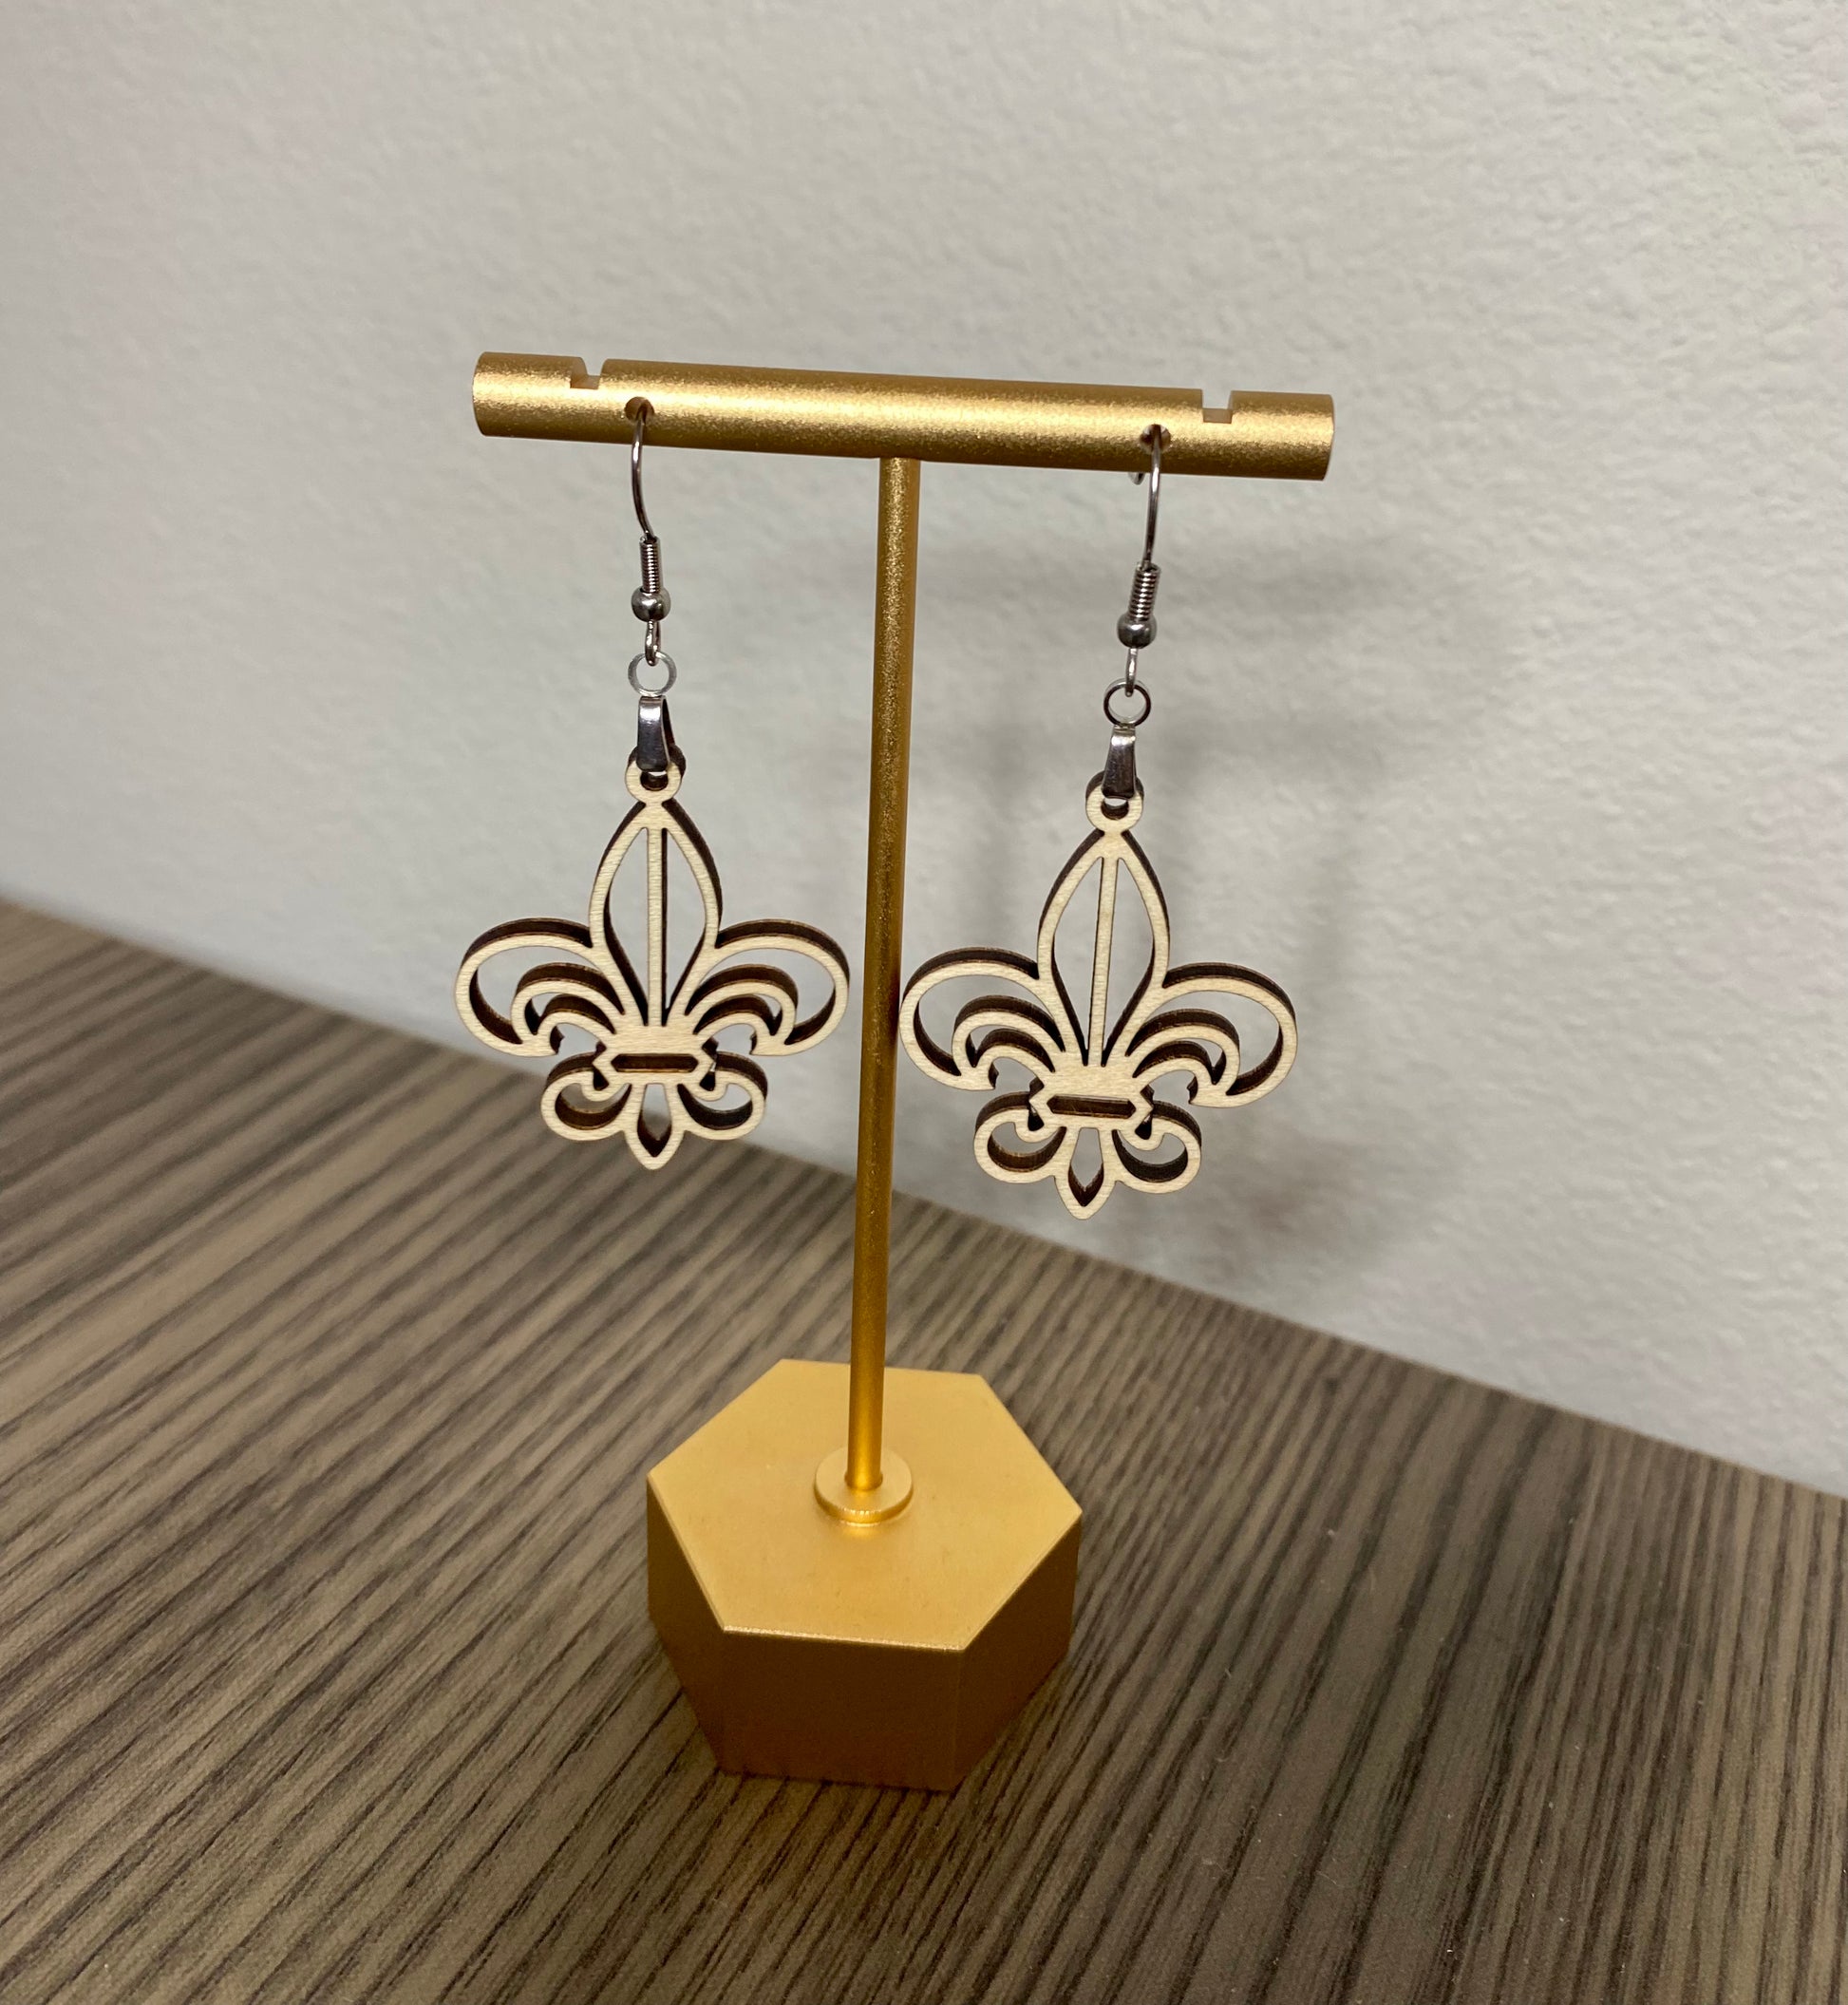 Maple plywood Fleur-de-lis earrings